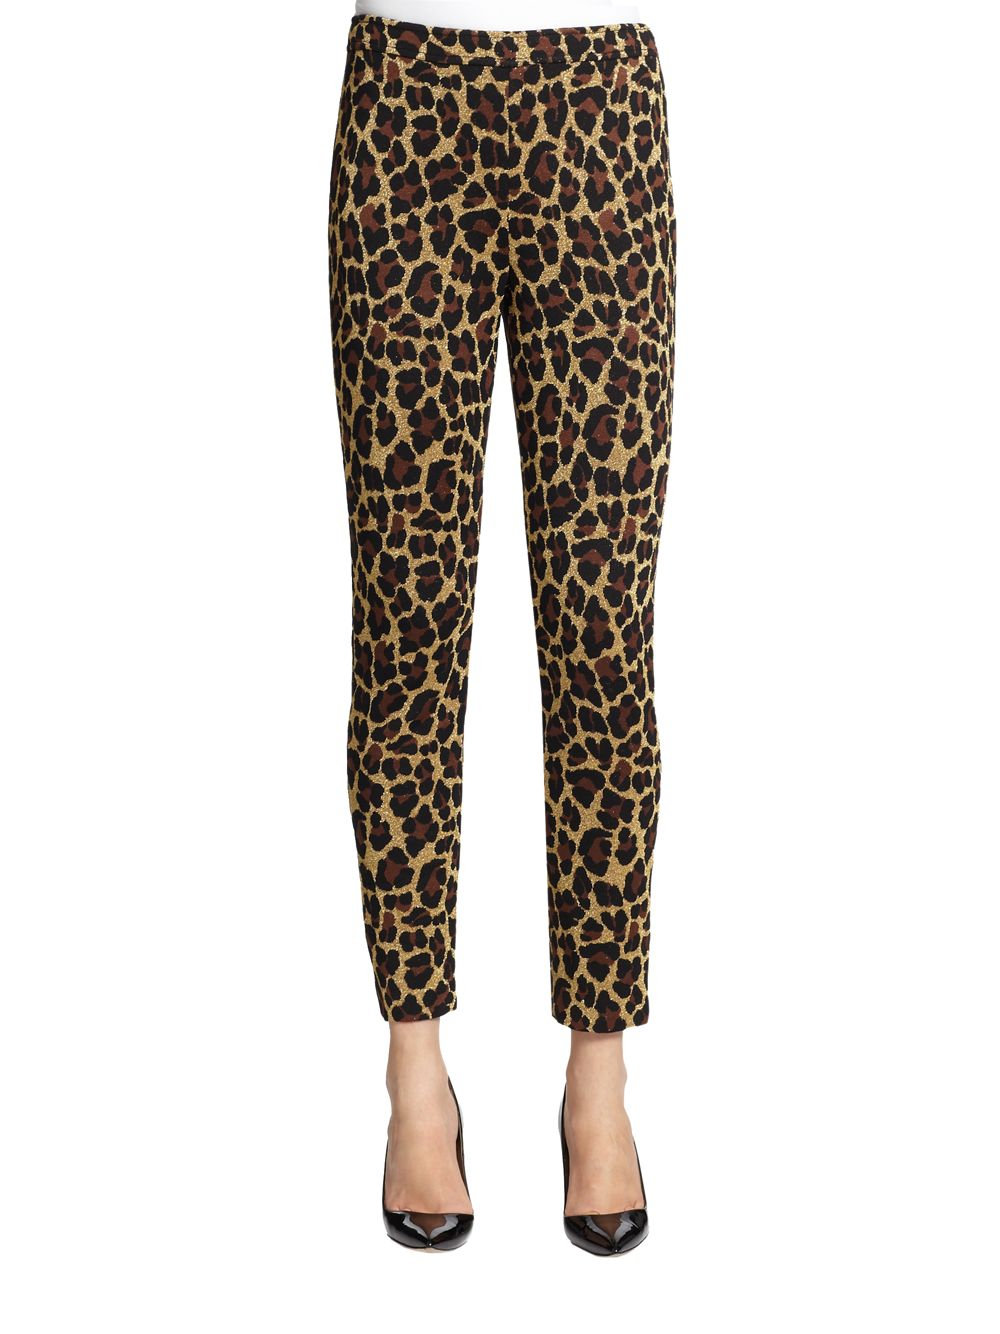 Lyst - St. john Alexa Leopard-print Jacquard Knit Pants